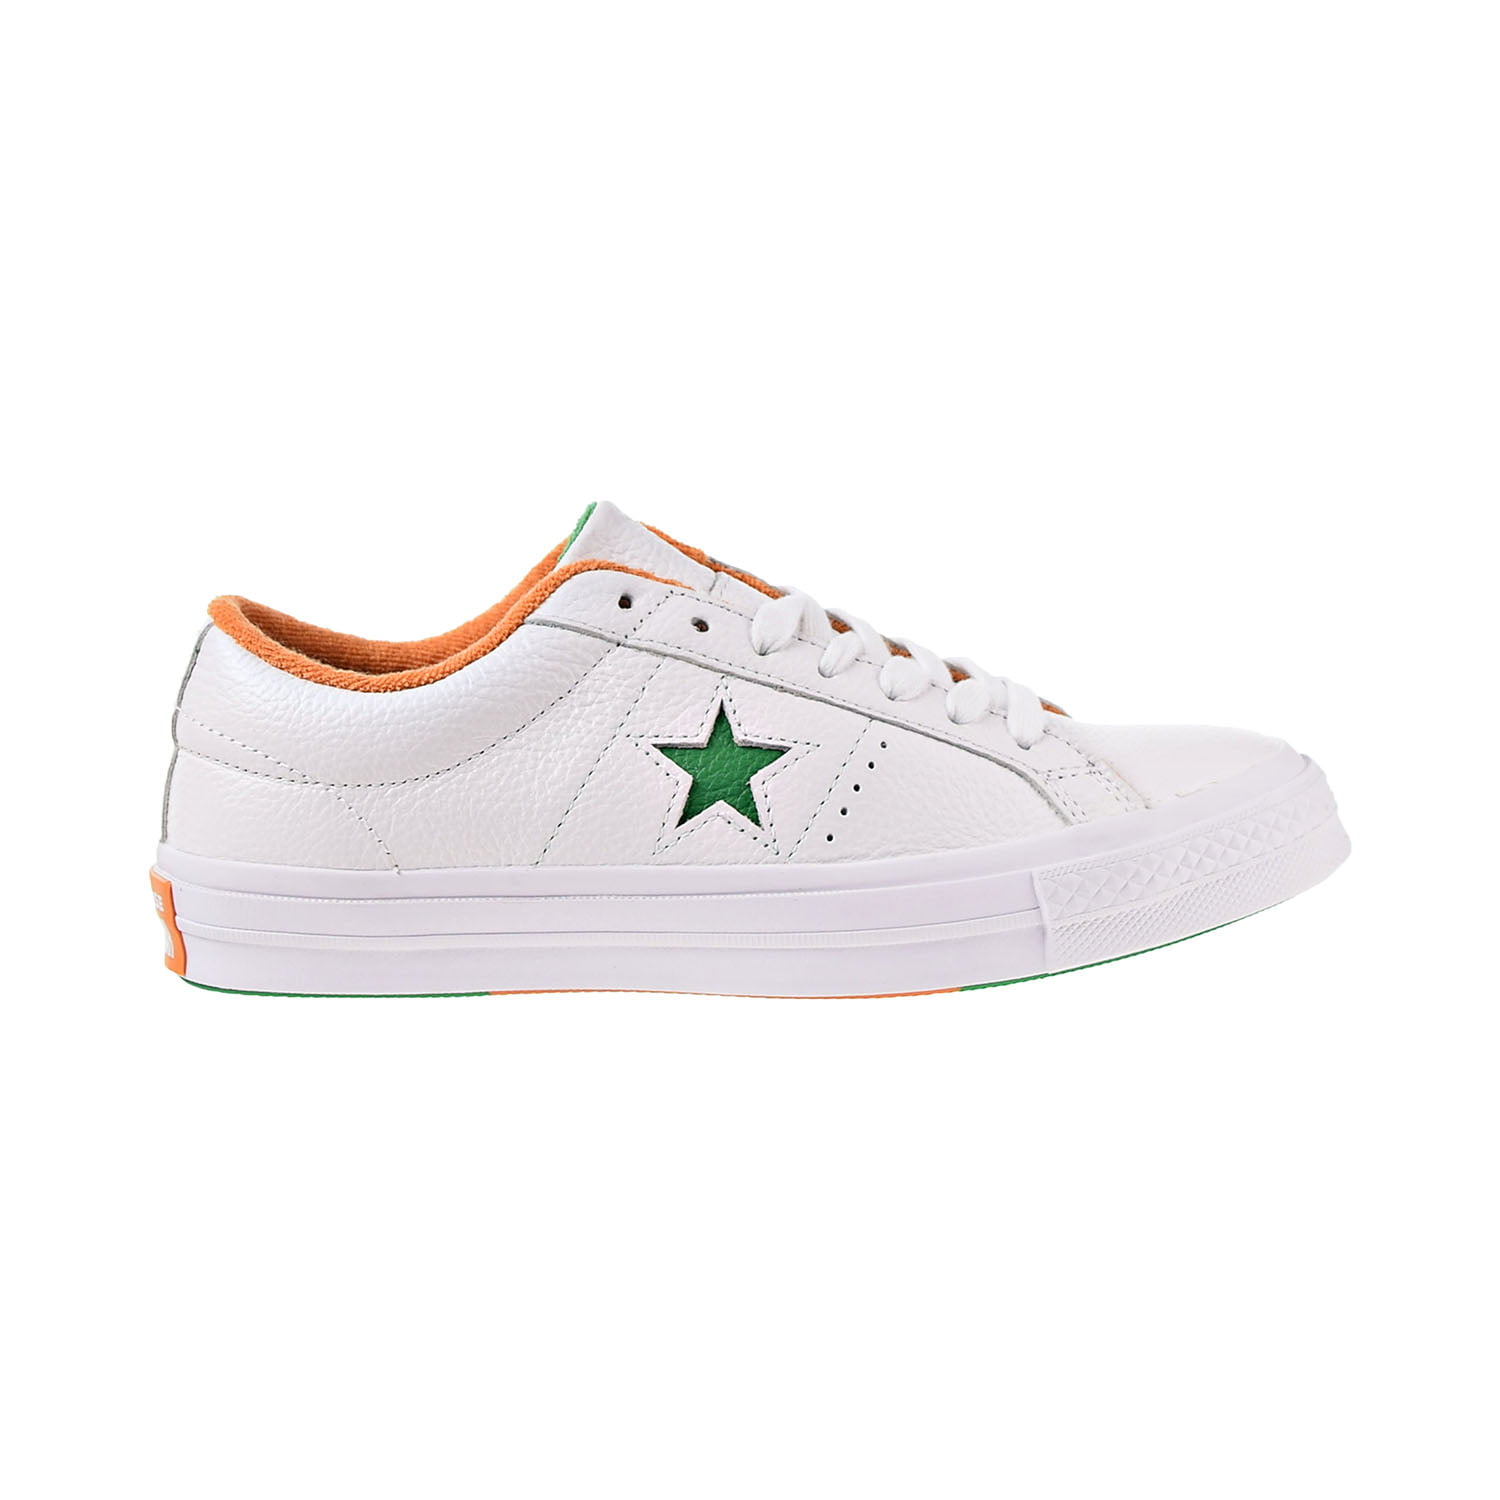 Converse One Star Grand Slam Men's Low Top Shoes White-Green 160594c Walmart.com